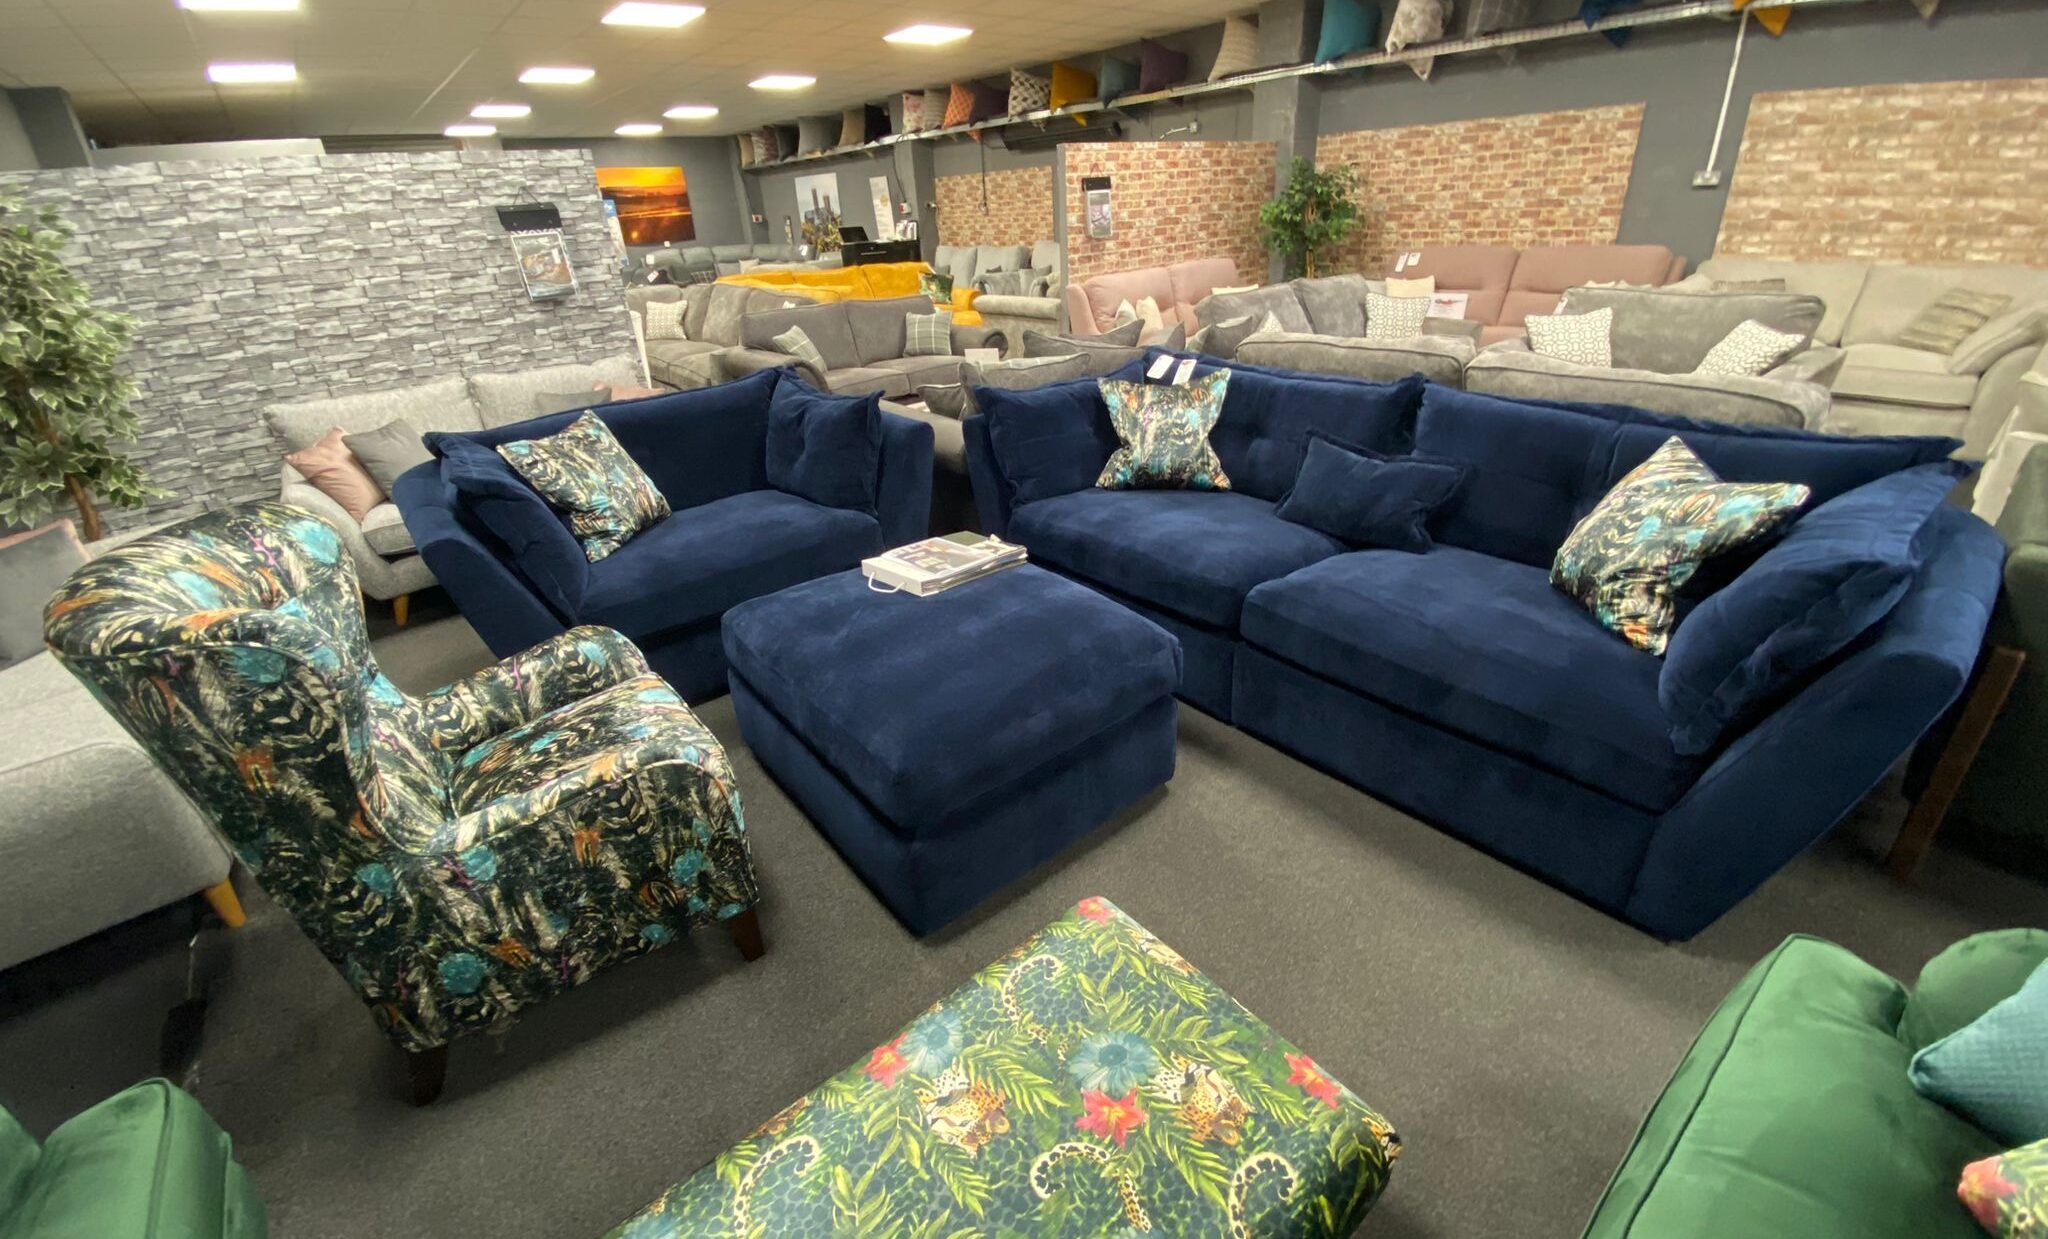 Sofa Business Earmarks Expansion Plans